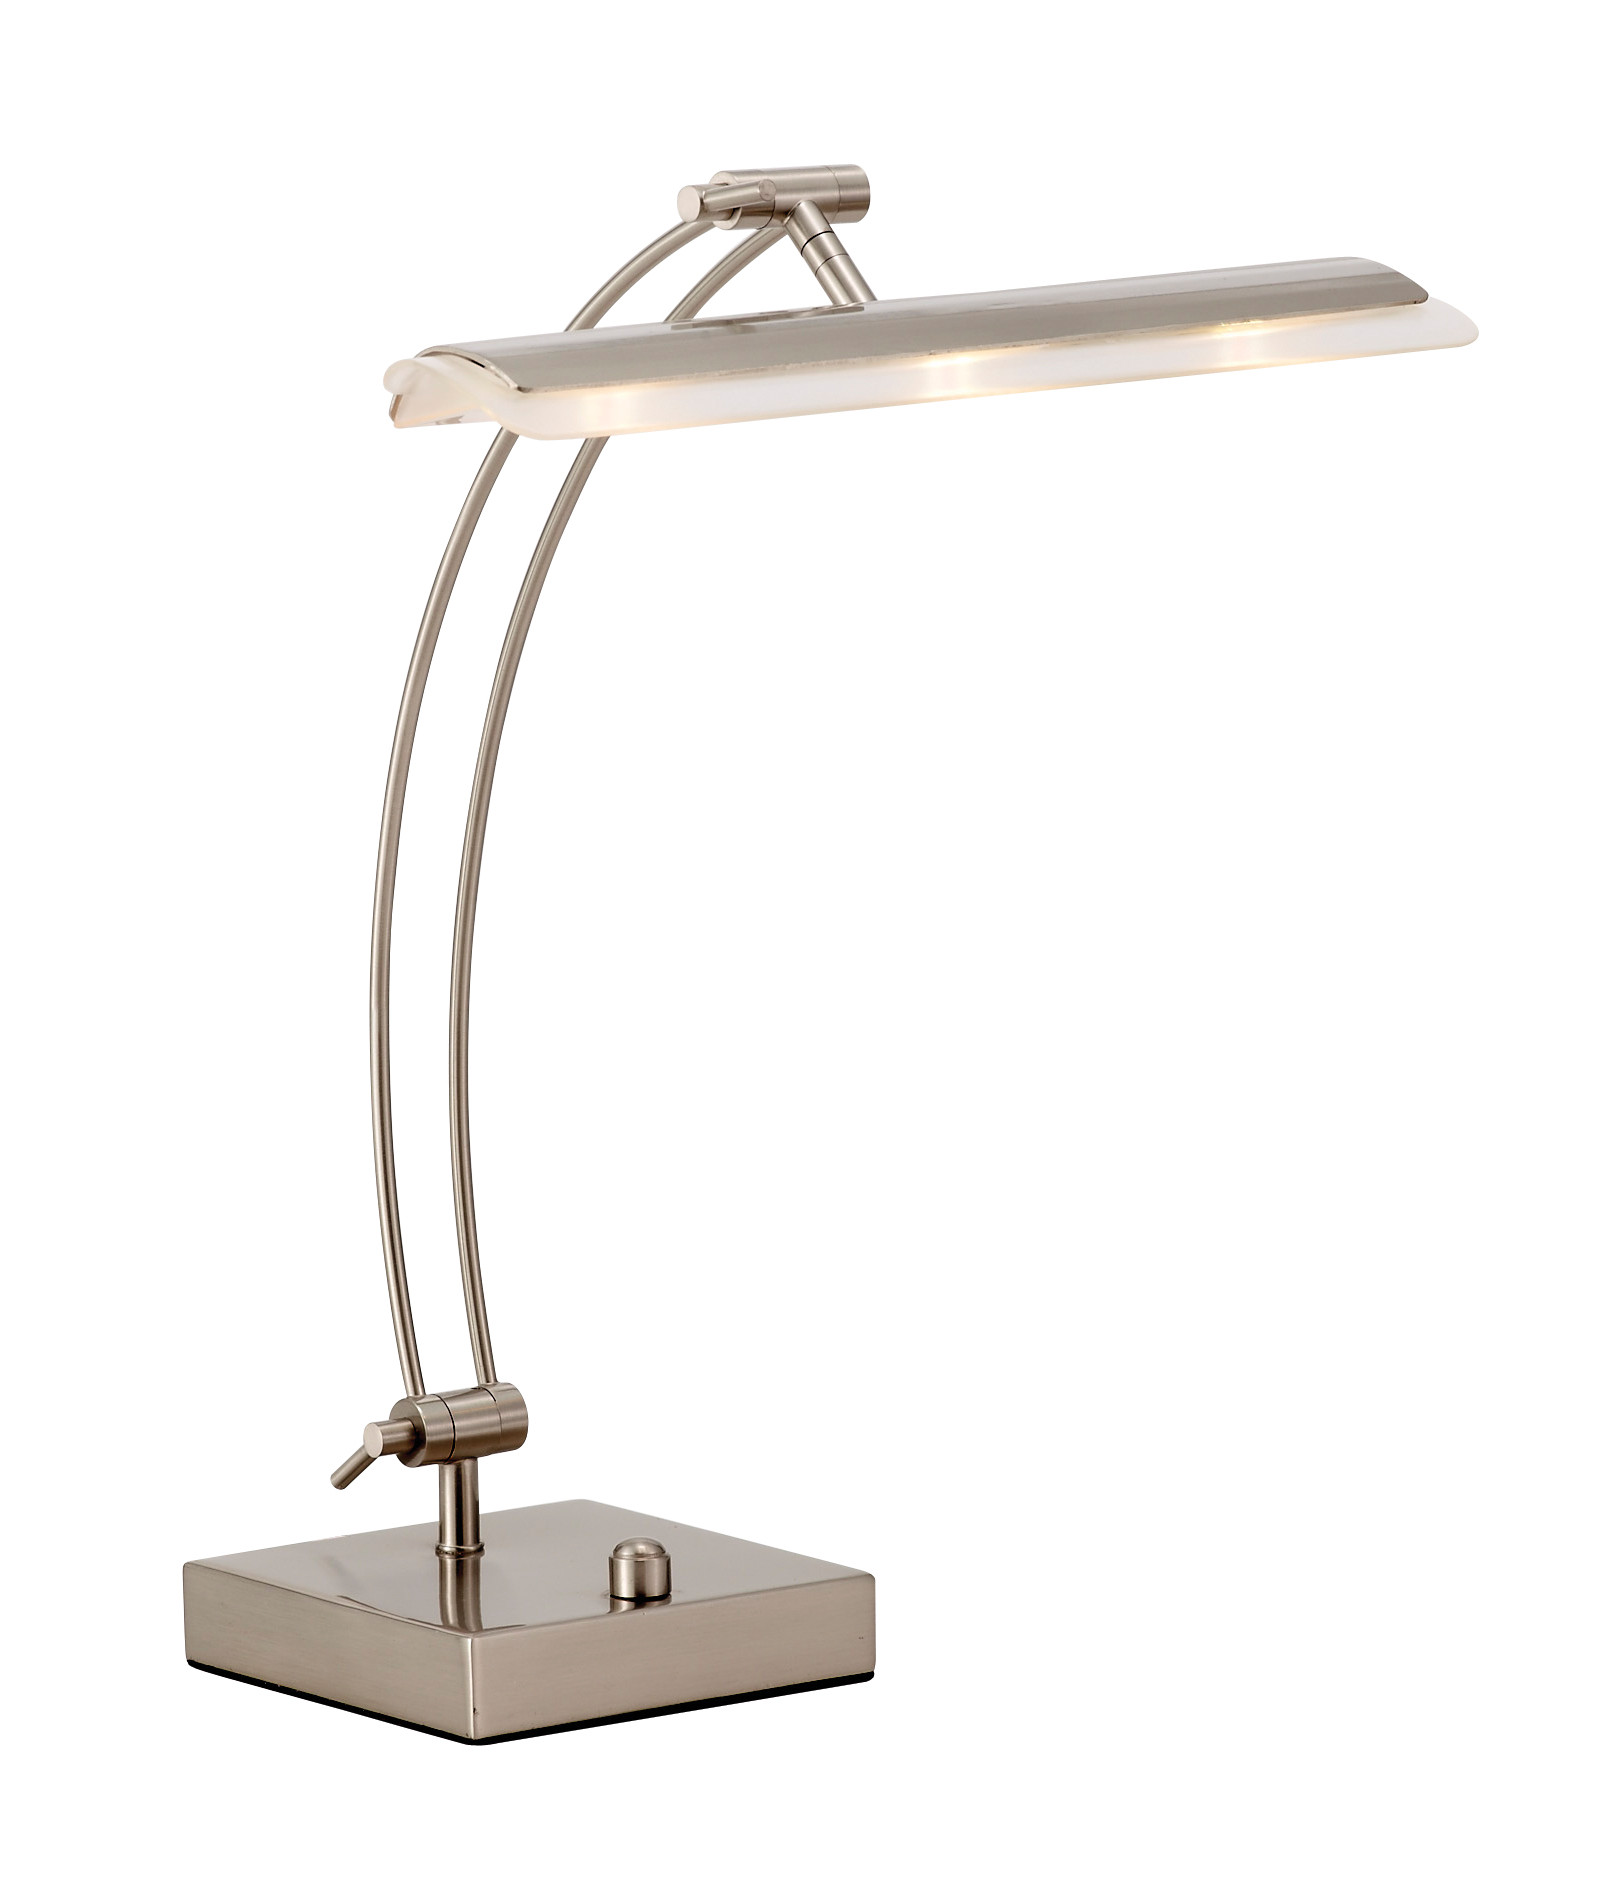 15" X 9-19" X 13" - 19" Brushed steel Metal LED Desk Lamp